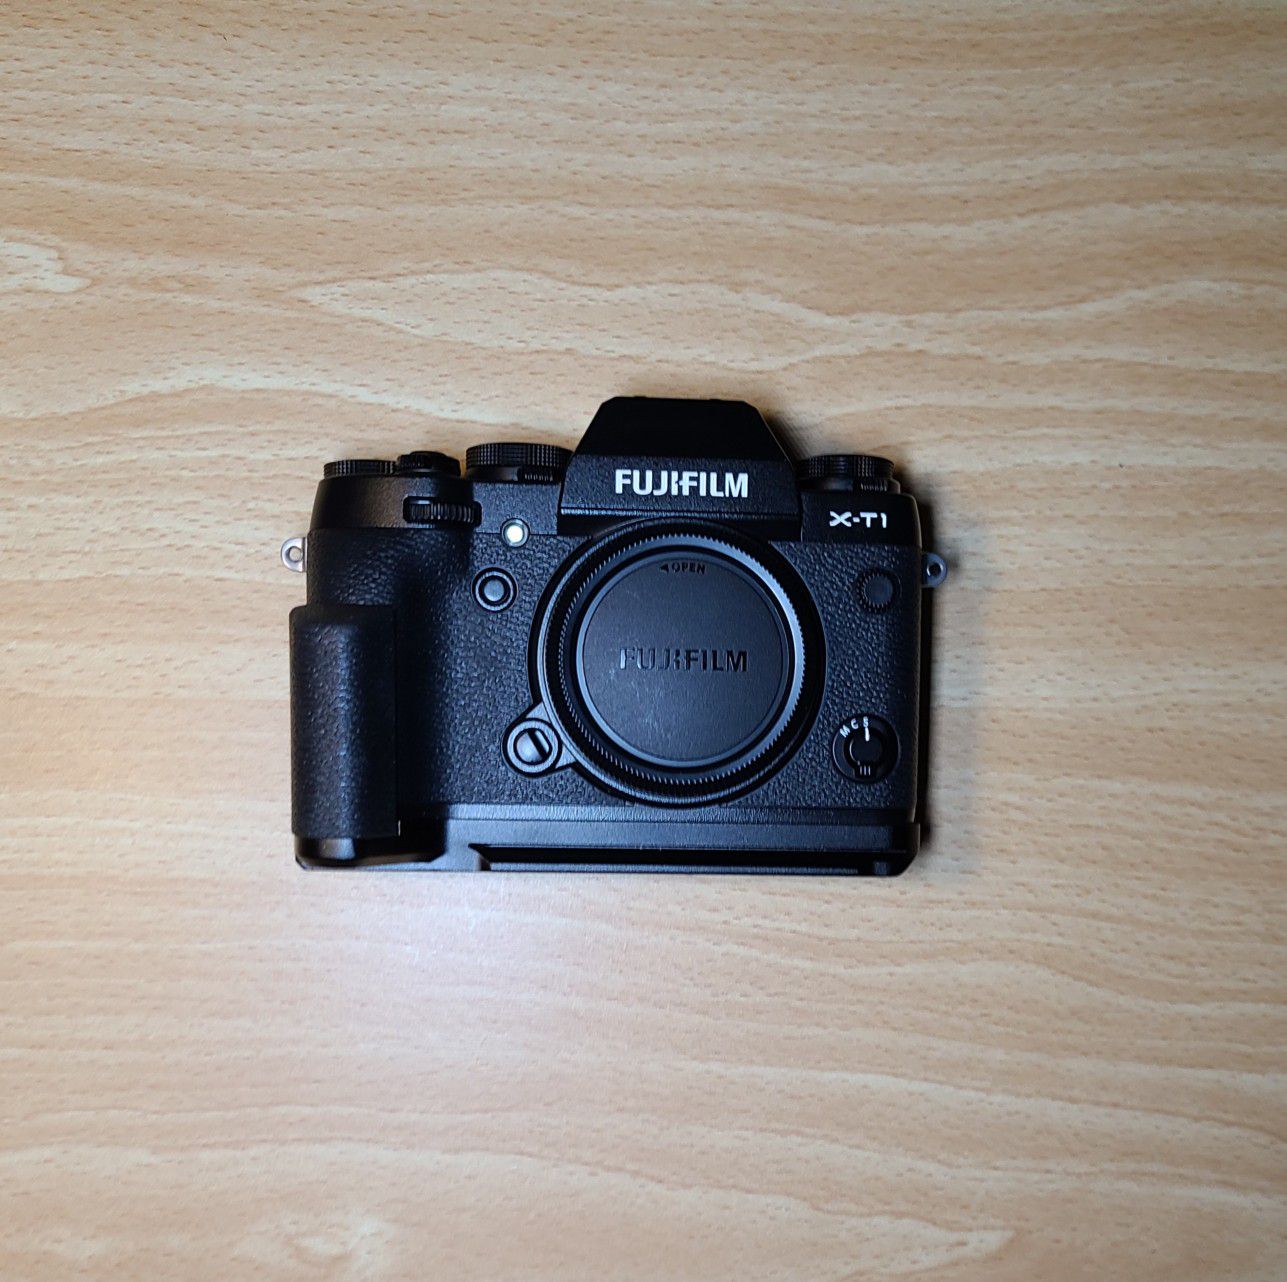 Fujifilm X-T1 with hand grip